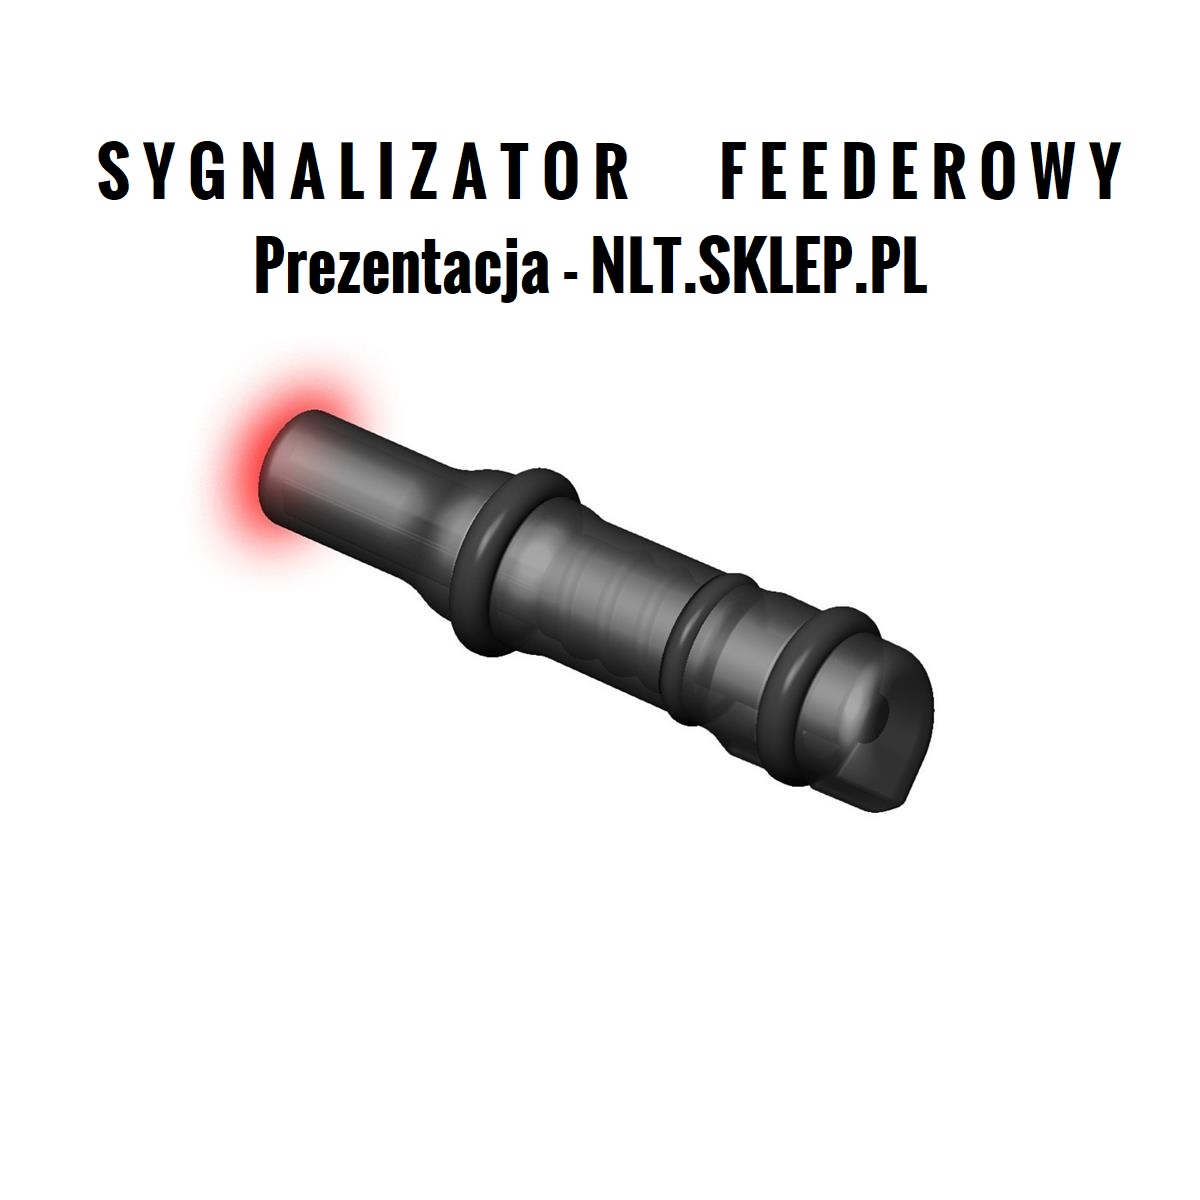 Nocny sygnalizator feederowy - FLAJZAR